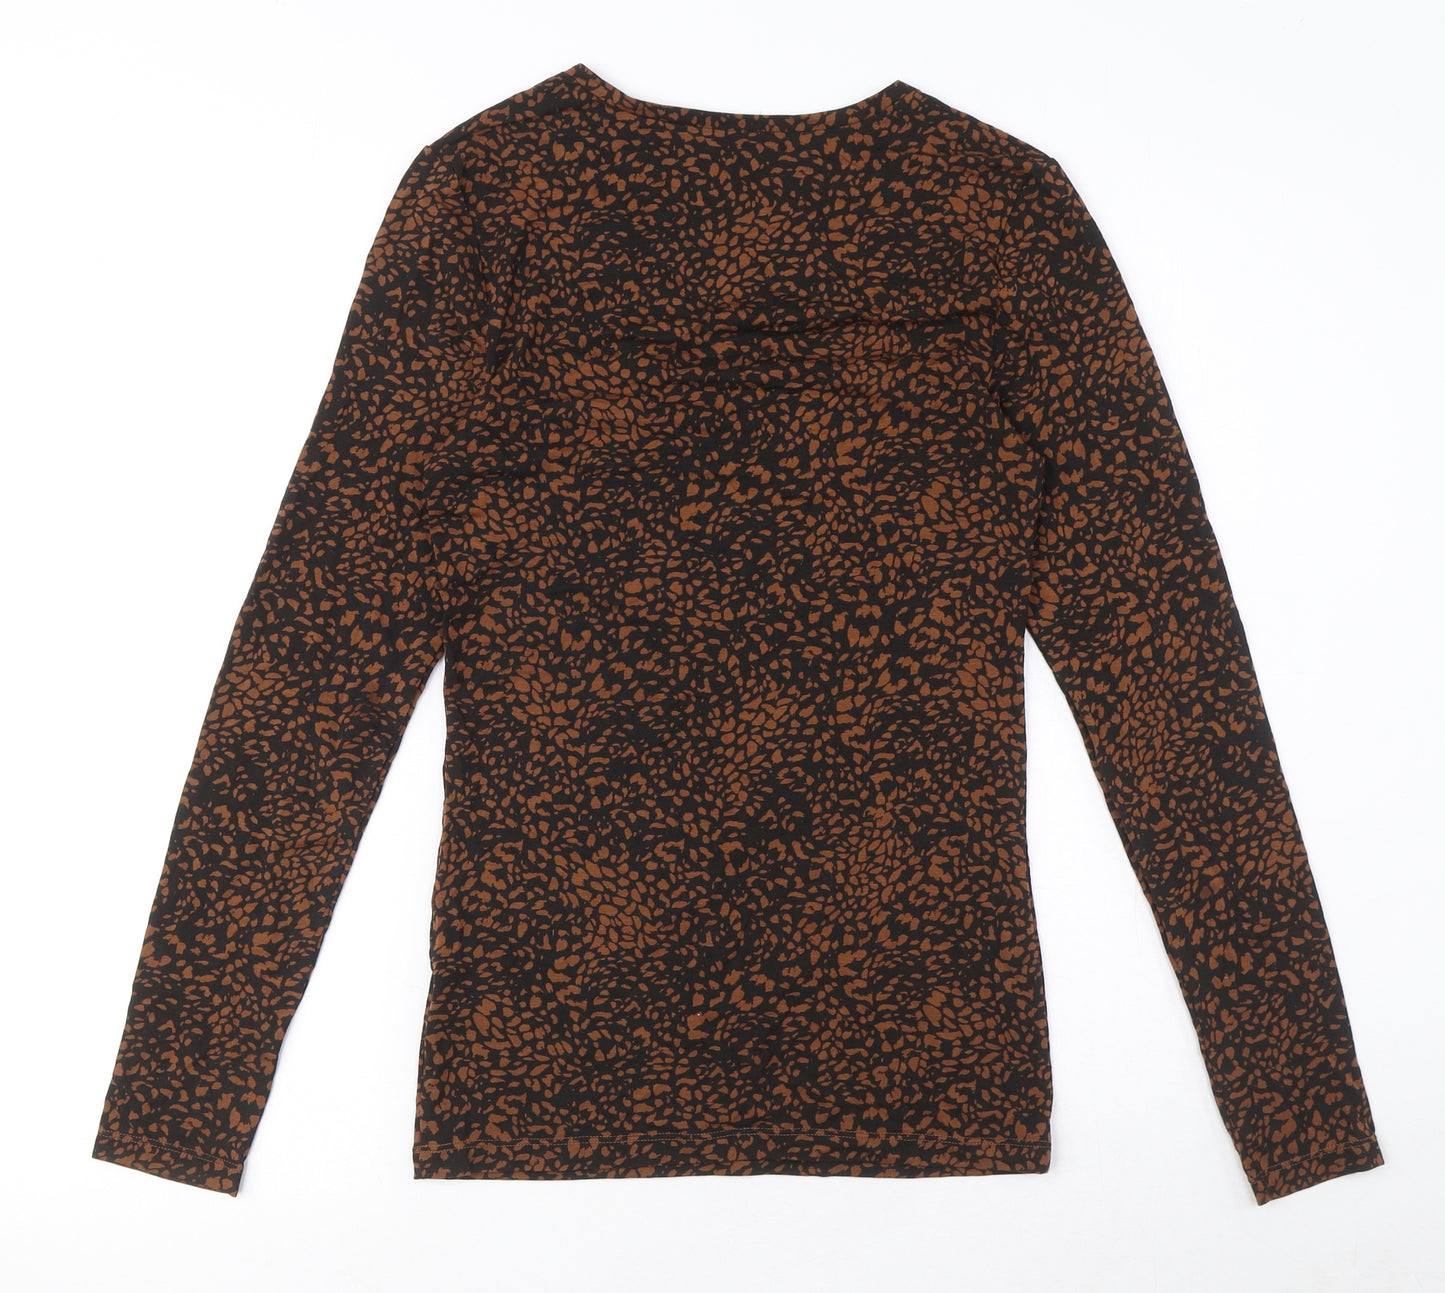 Marks and Spencer Womens Black Animal Print Acrylic Basic T-Shirt Size 12 Round Neck - Heatgen, leopard pattern